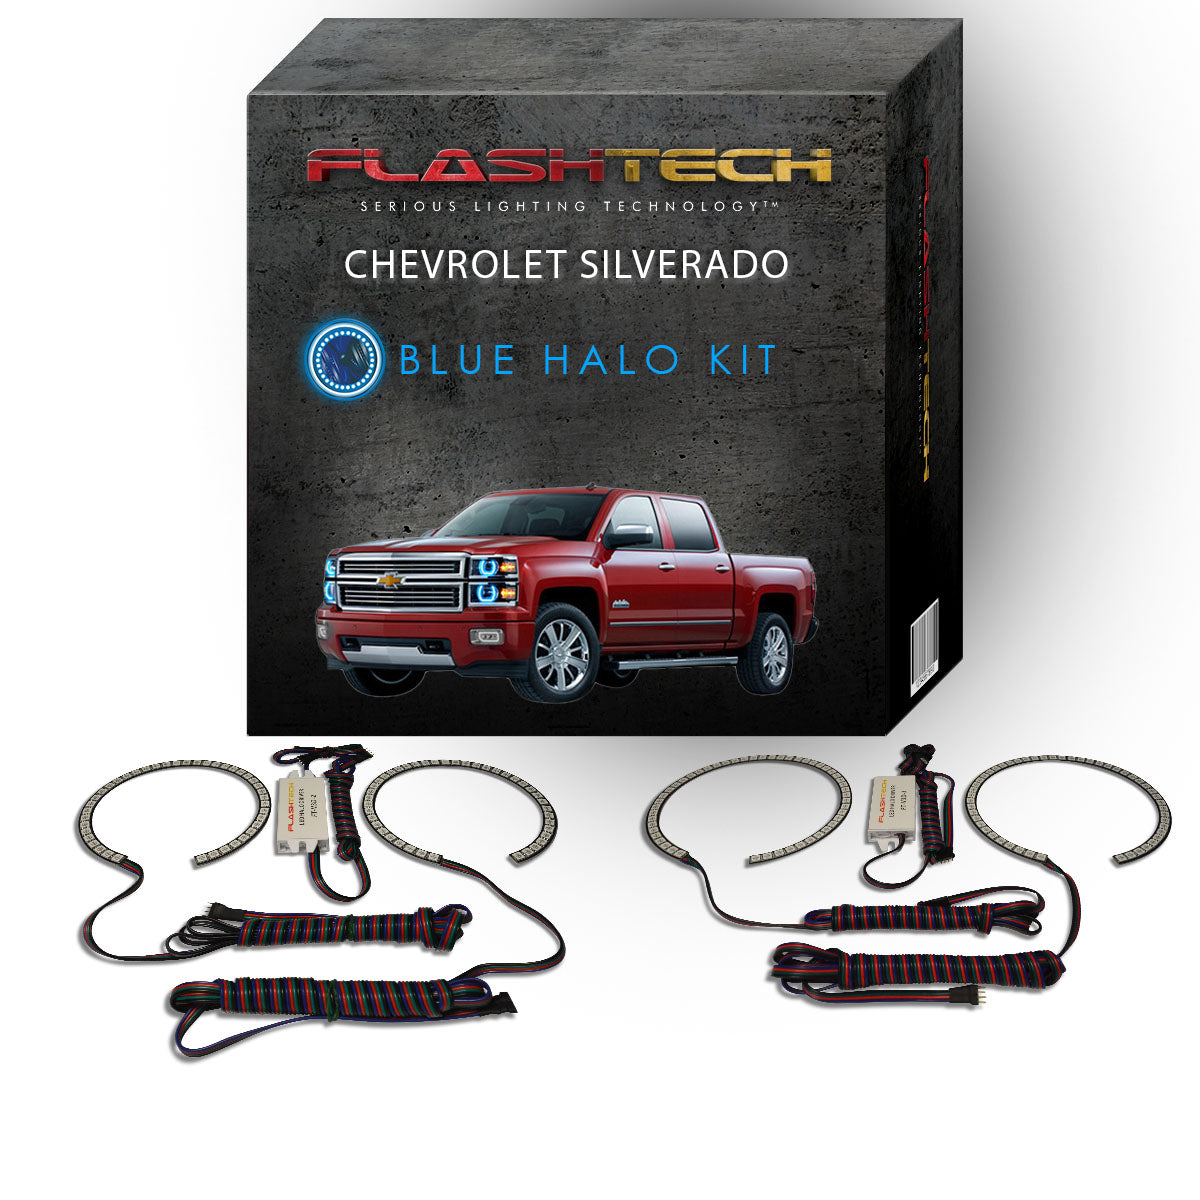 Chevrolet-Silverado-2014, 2015-LED-Halo-Headlights-RGB-No Remote-CY-SV1415P-V3H